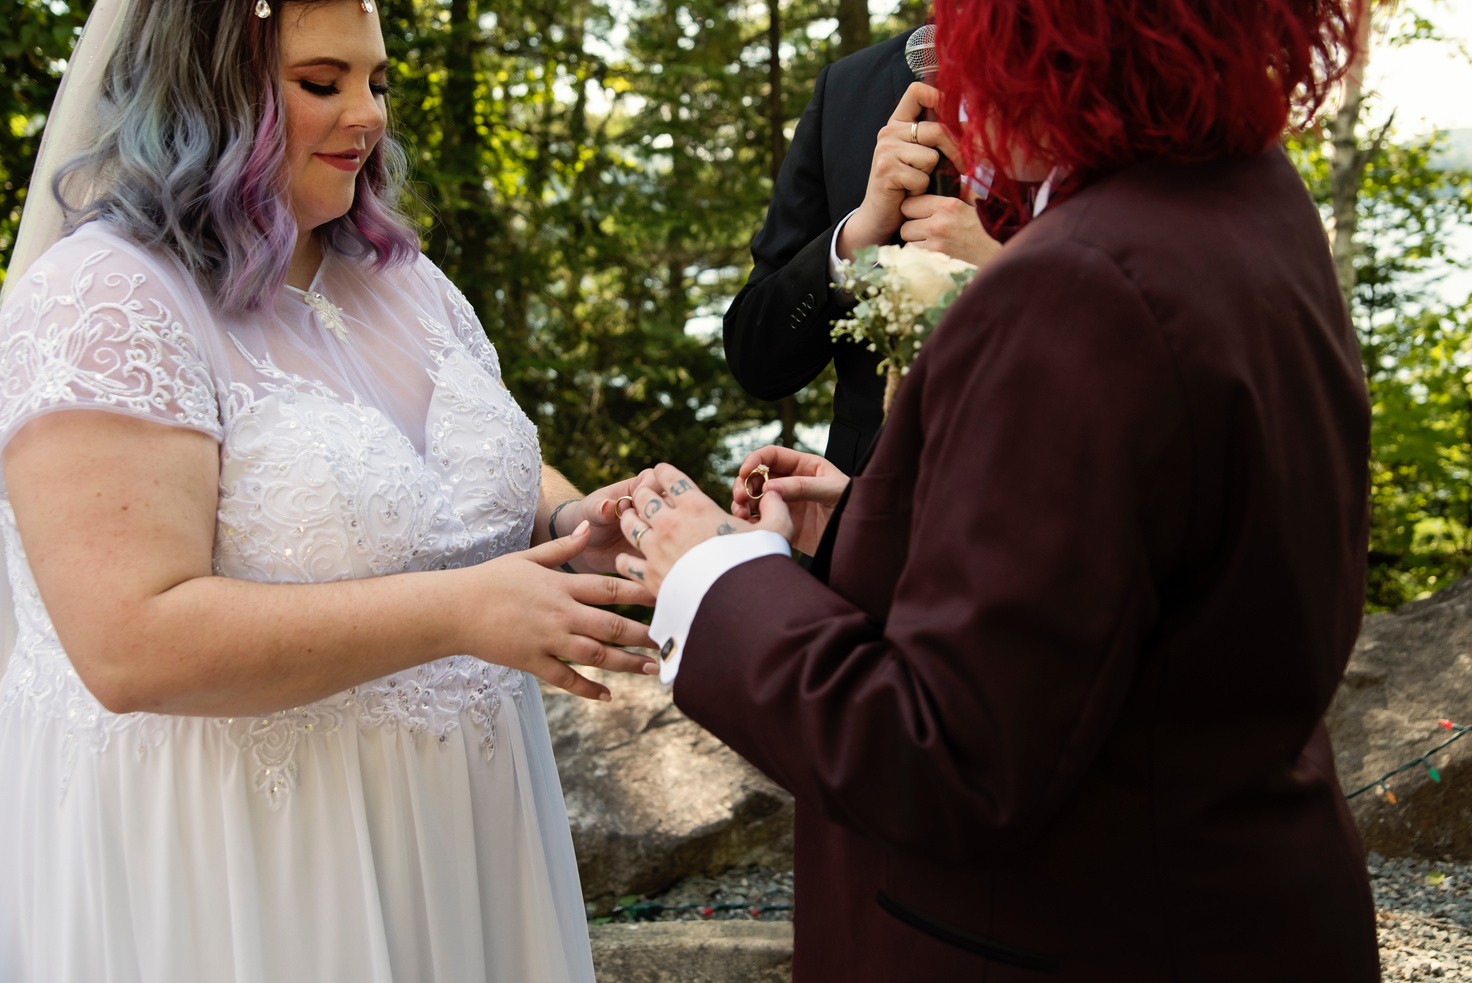 Lesbian brides exchanging rings at LGBTQ+ wedding ceremony.